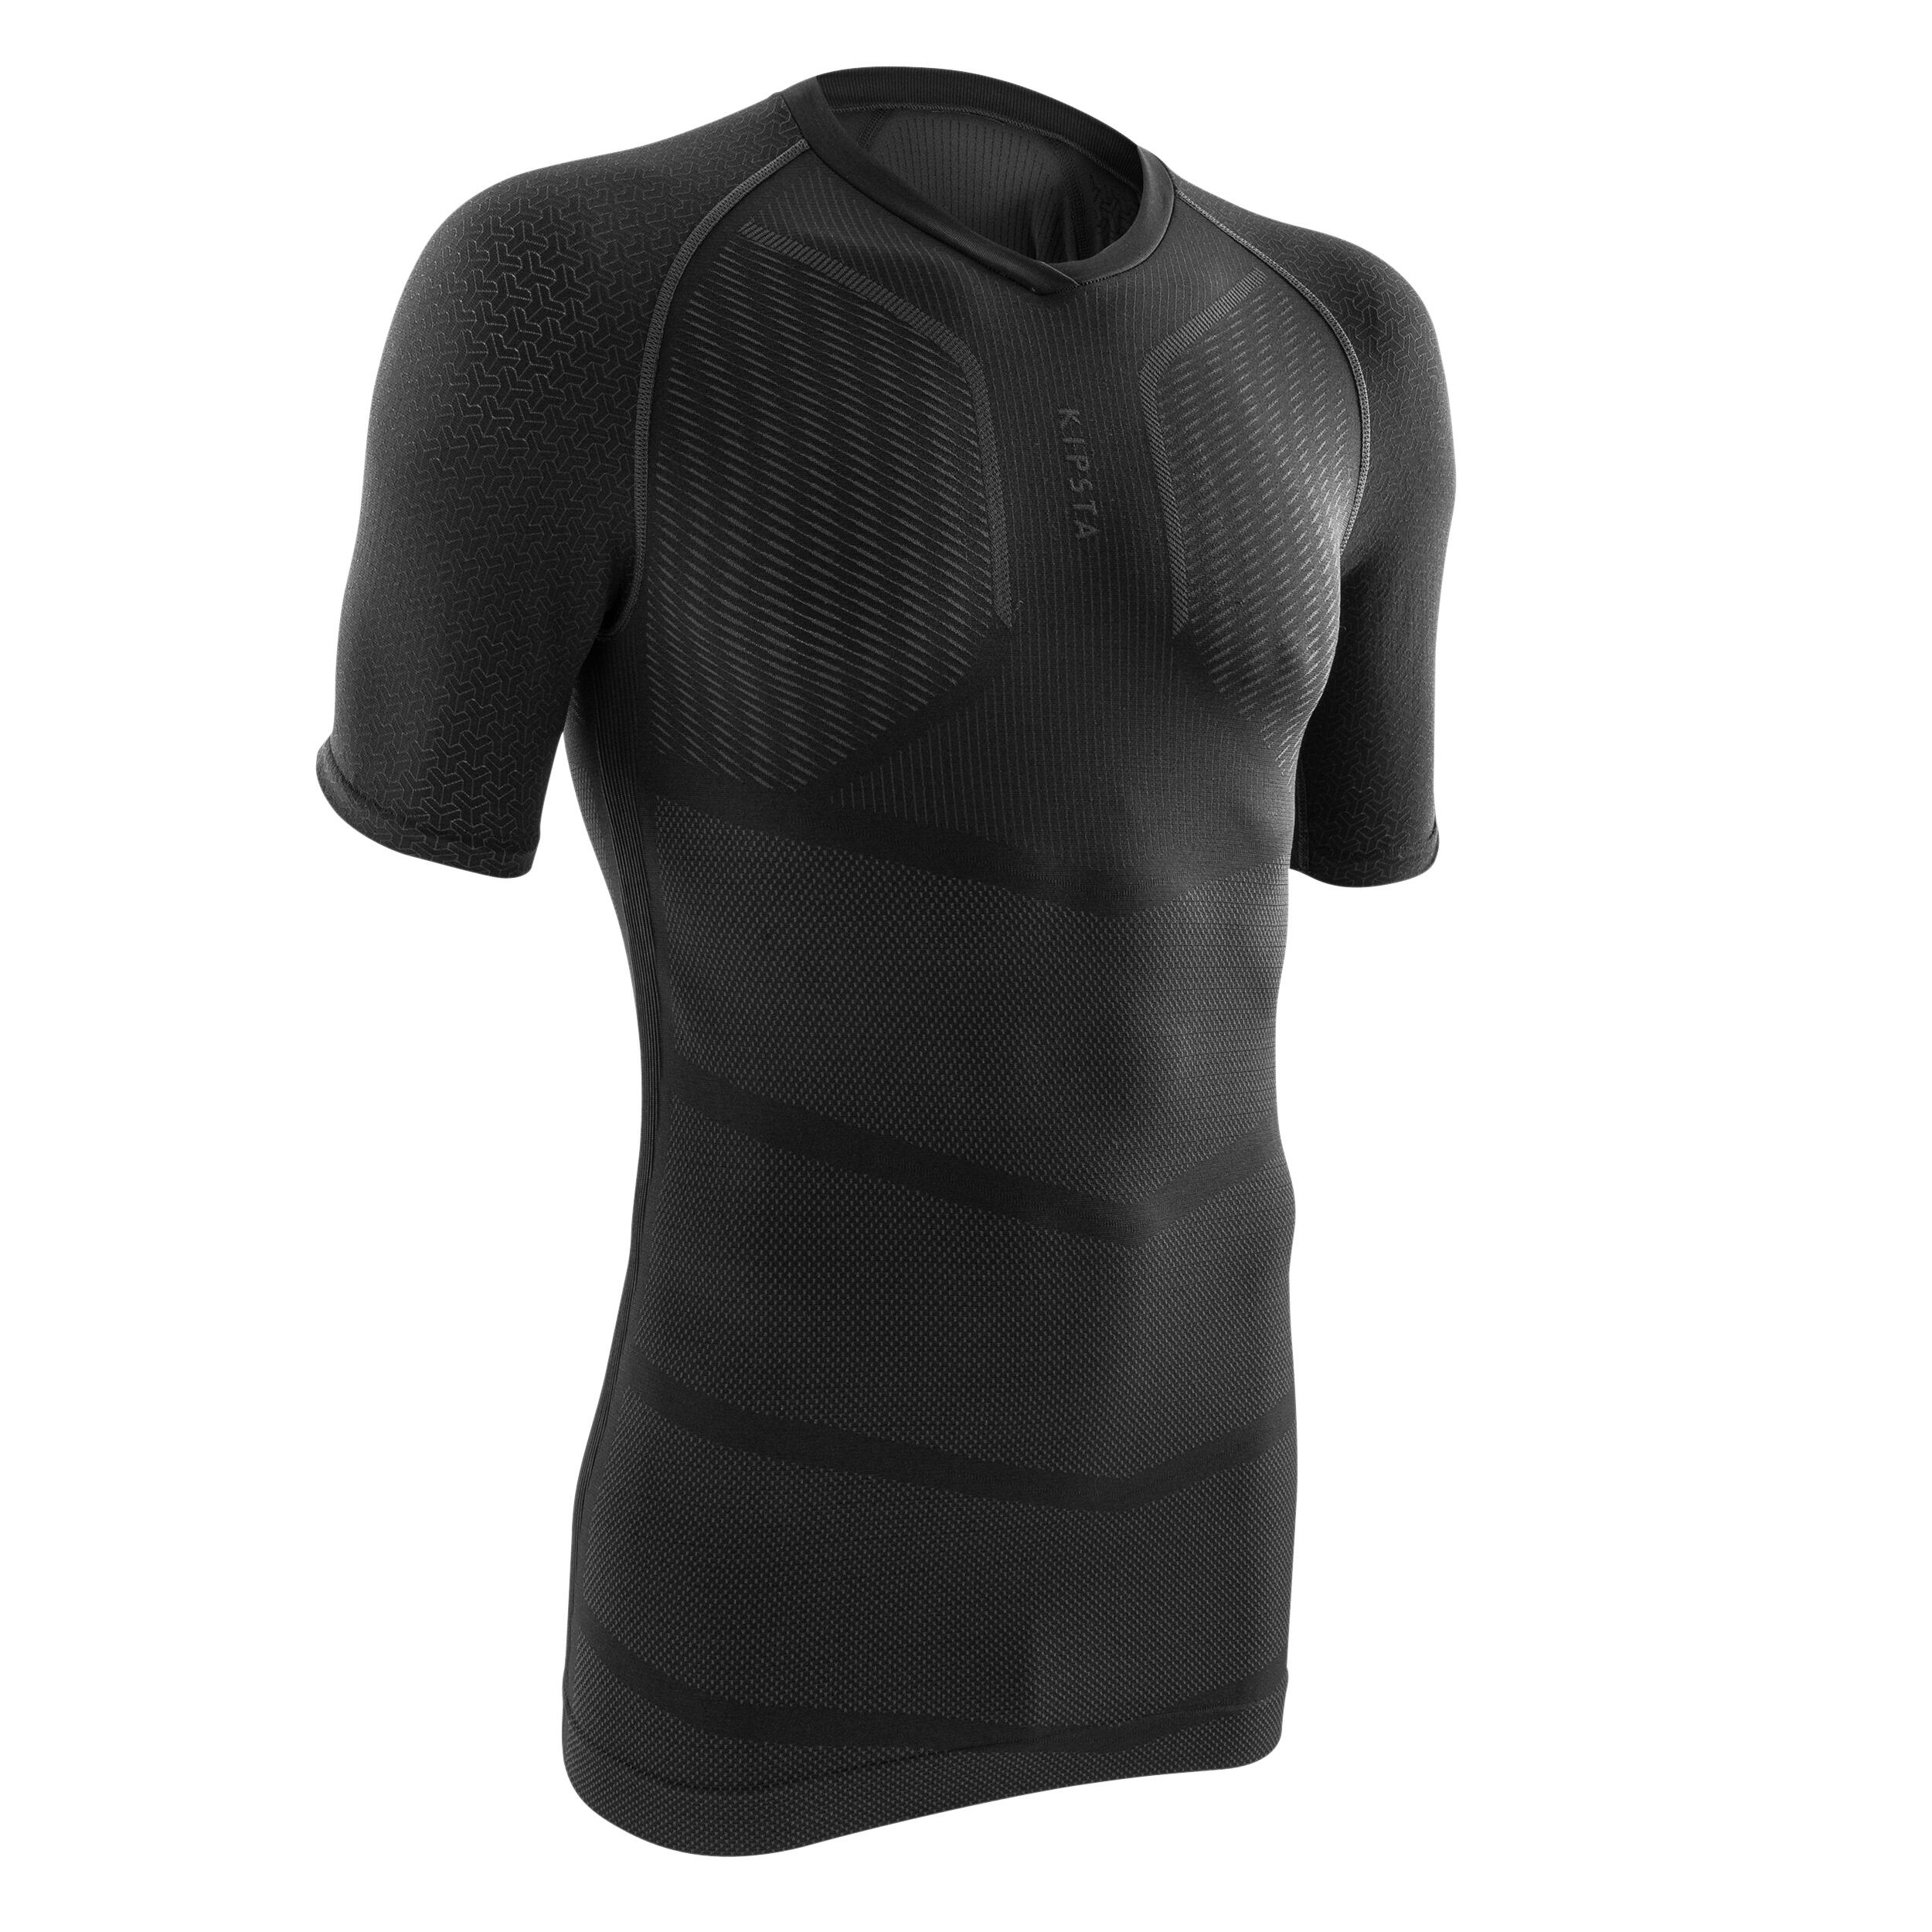 Image of Men's Short-Sleeved Thermal Base Layer Top - Keepdry 500 Black